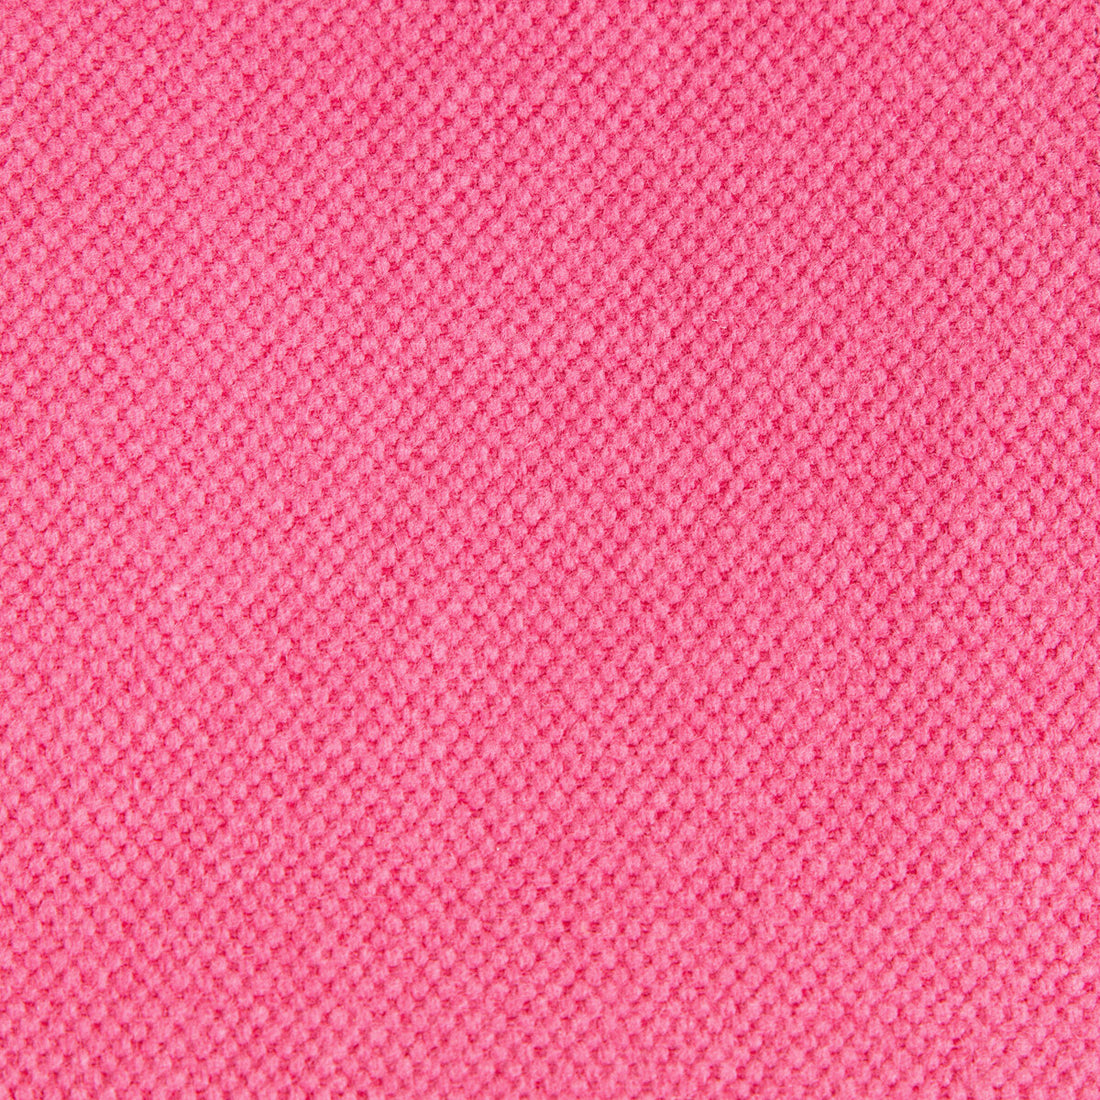 Lima fabric in frambuesa color - pattern GDT5616.017.0 - by Gaston y Daniela in the Gaston Nuevo Mundo collection